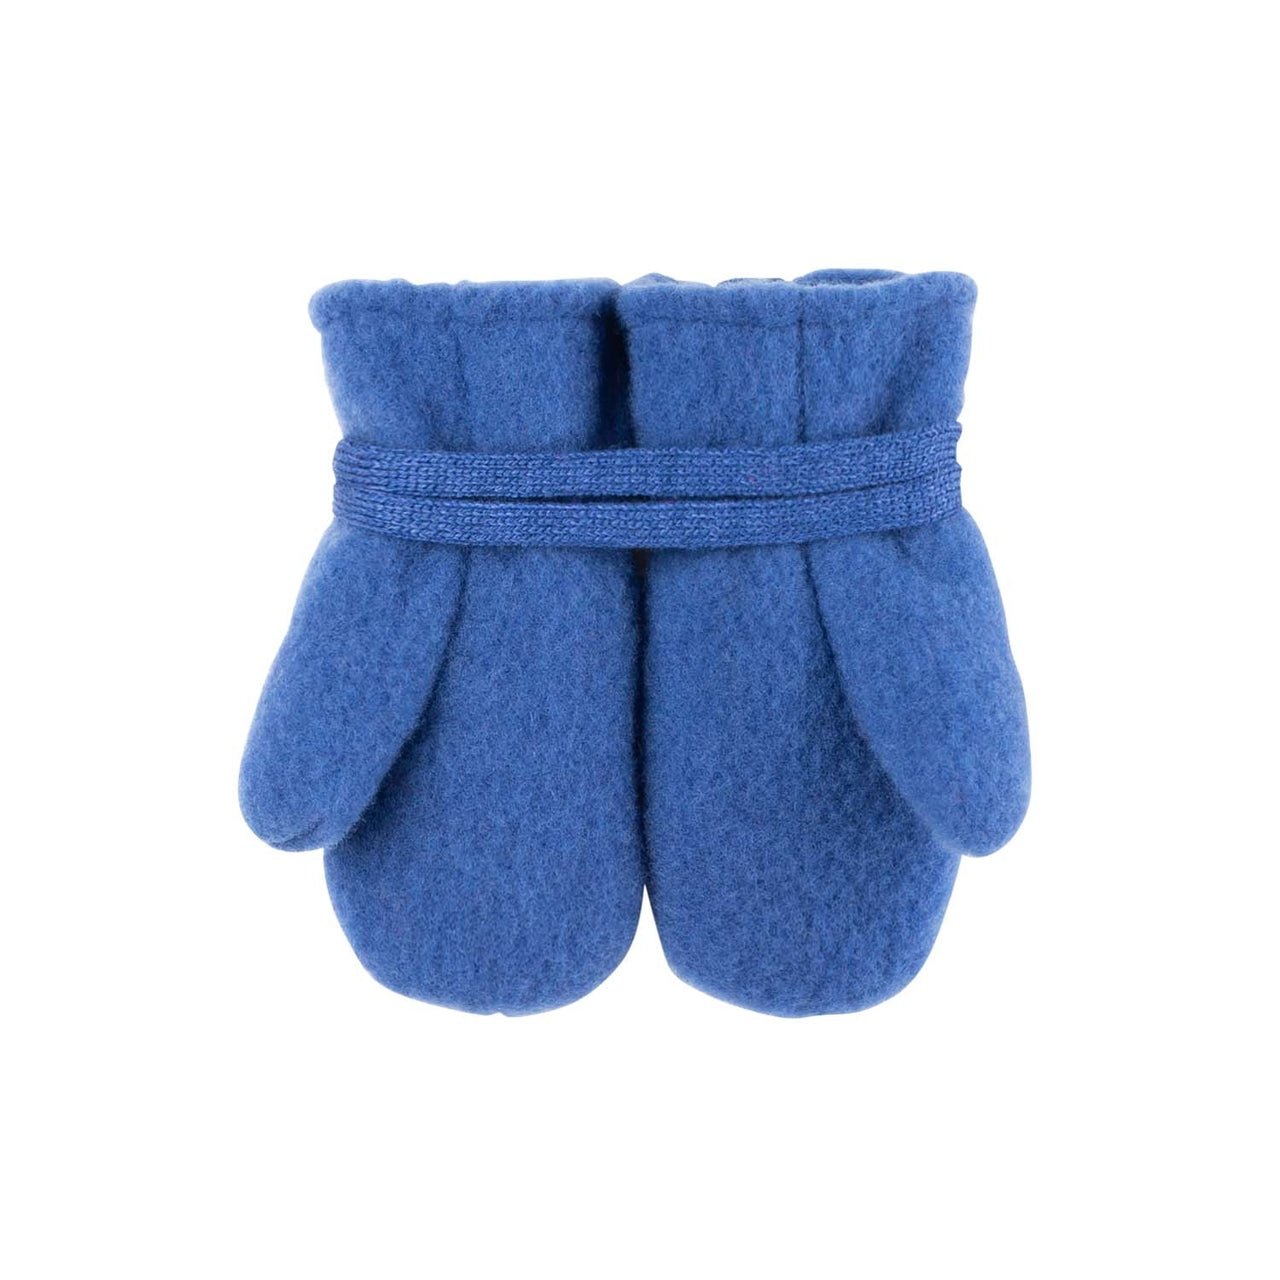 PurePure Handschuhe Feustel jeans blau Wolle - Familienbande